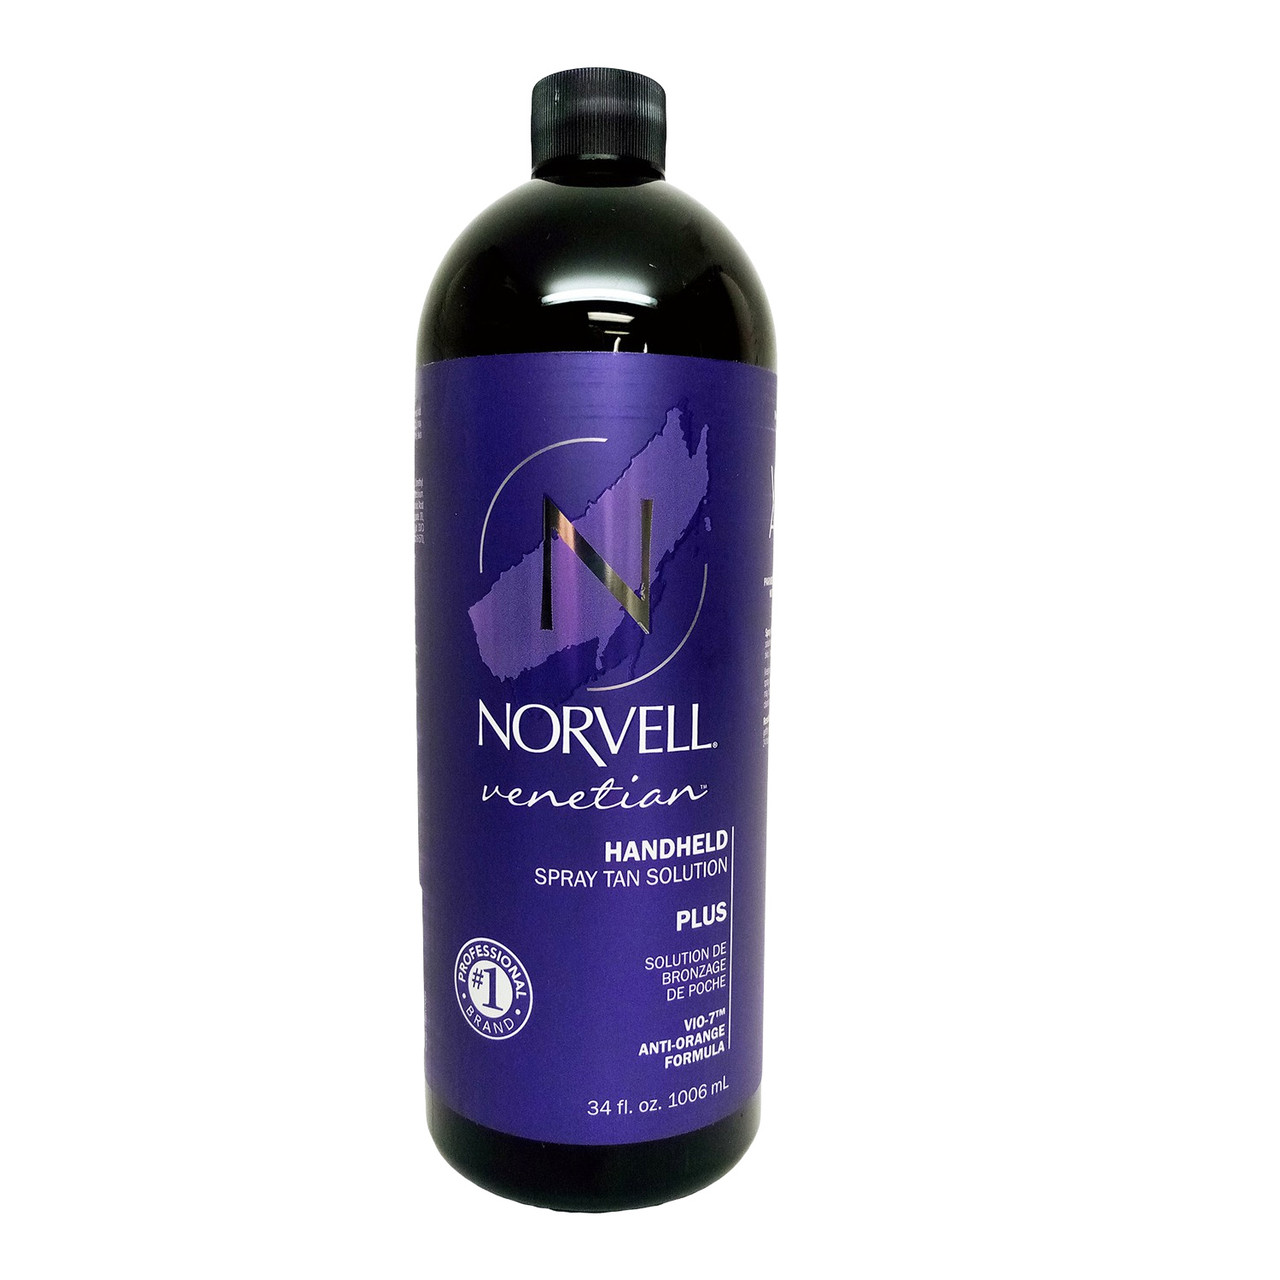 Norvell Venetian Plus Spray Tan Solution - 34 oz.